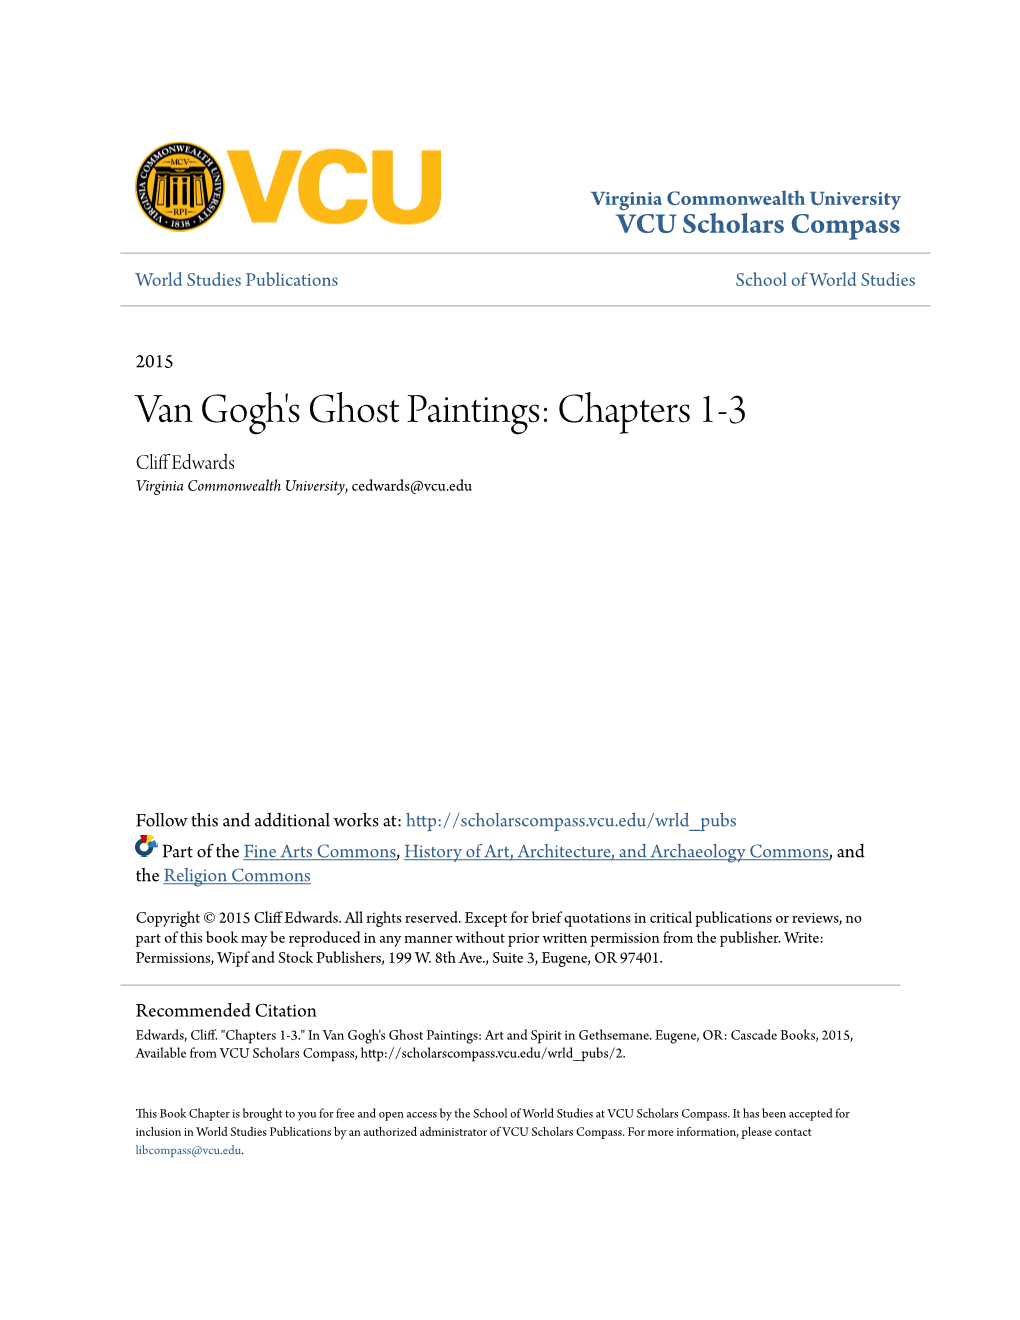 Van Gogh's Ghost Paintings: Chapters 1-3 Cliff De Wards Virginia Commonwealth University, Cedwards@Vcu.Edu